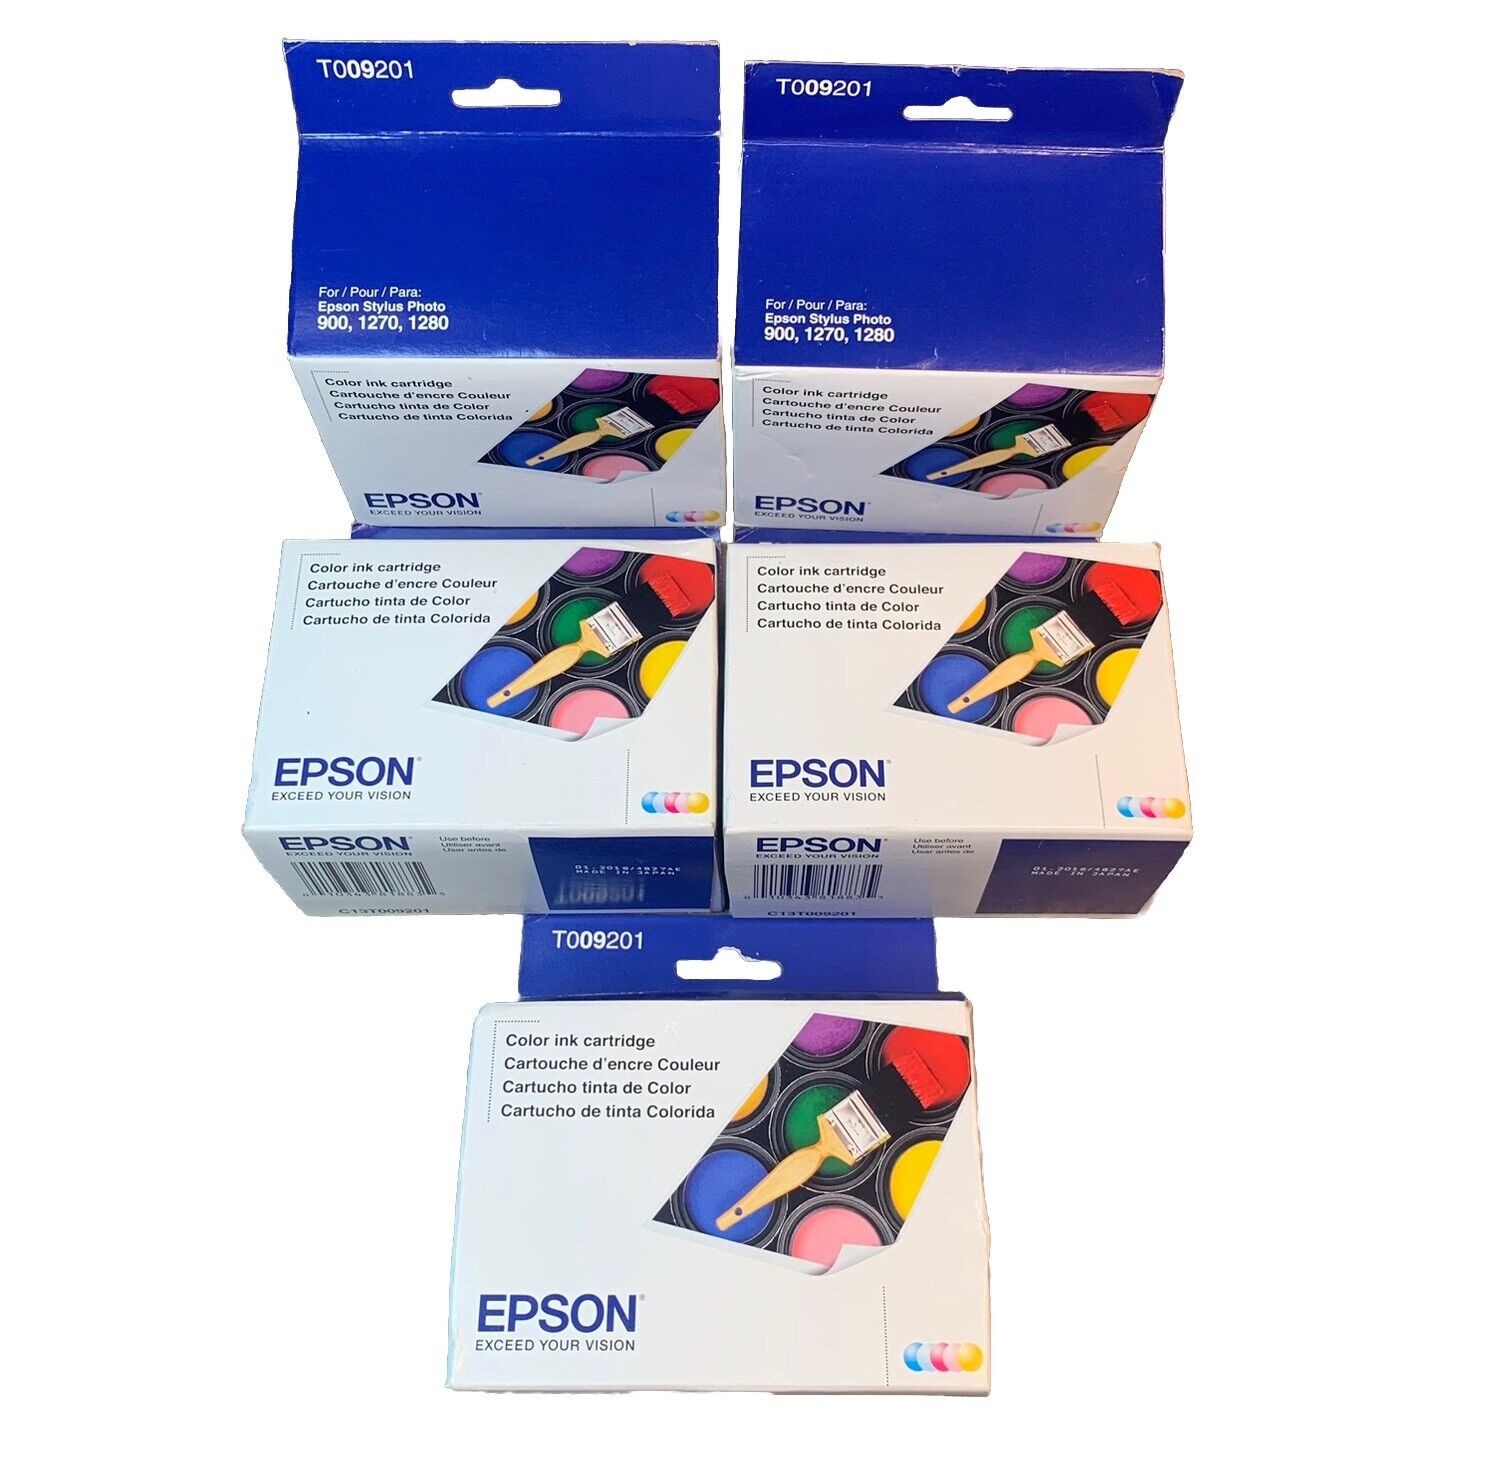 5 x EXPIRED GENUINE Epson T009201 OEM Color Ink Cartridge New Expired 01/2019